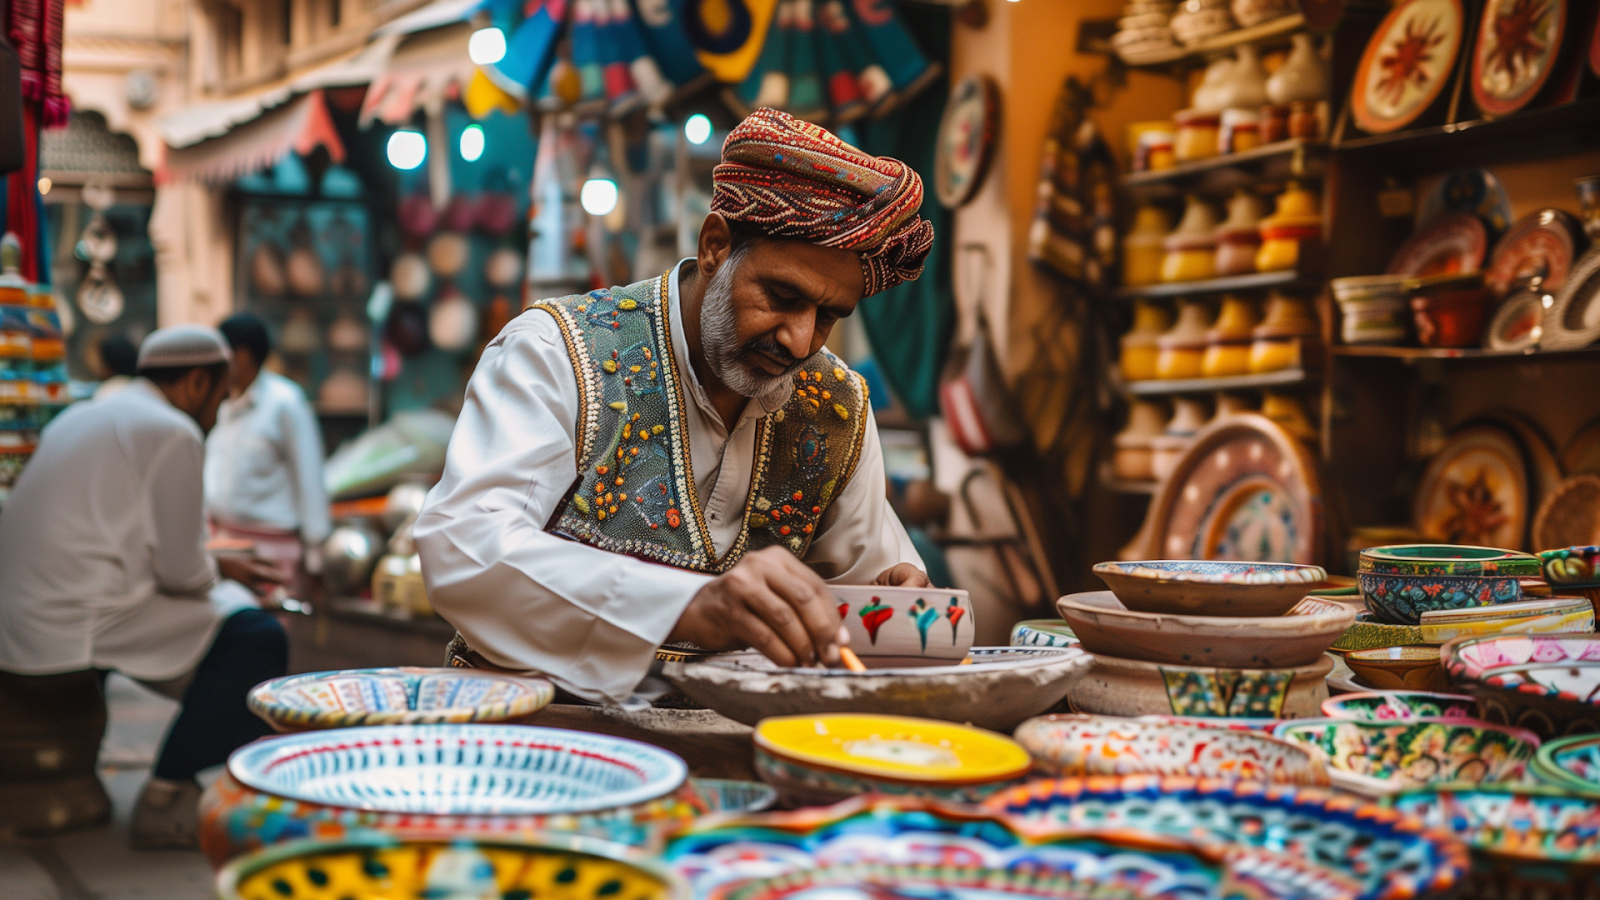 Artisan hand-painting ceramics in Jaipur's vibrant market, showcasing traditional Rajasthani craftsmanship.